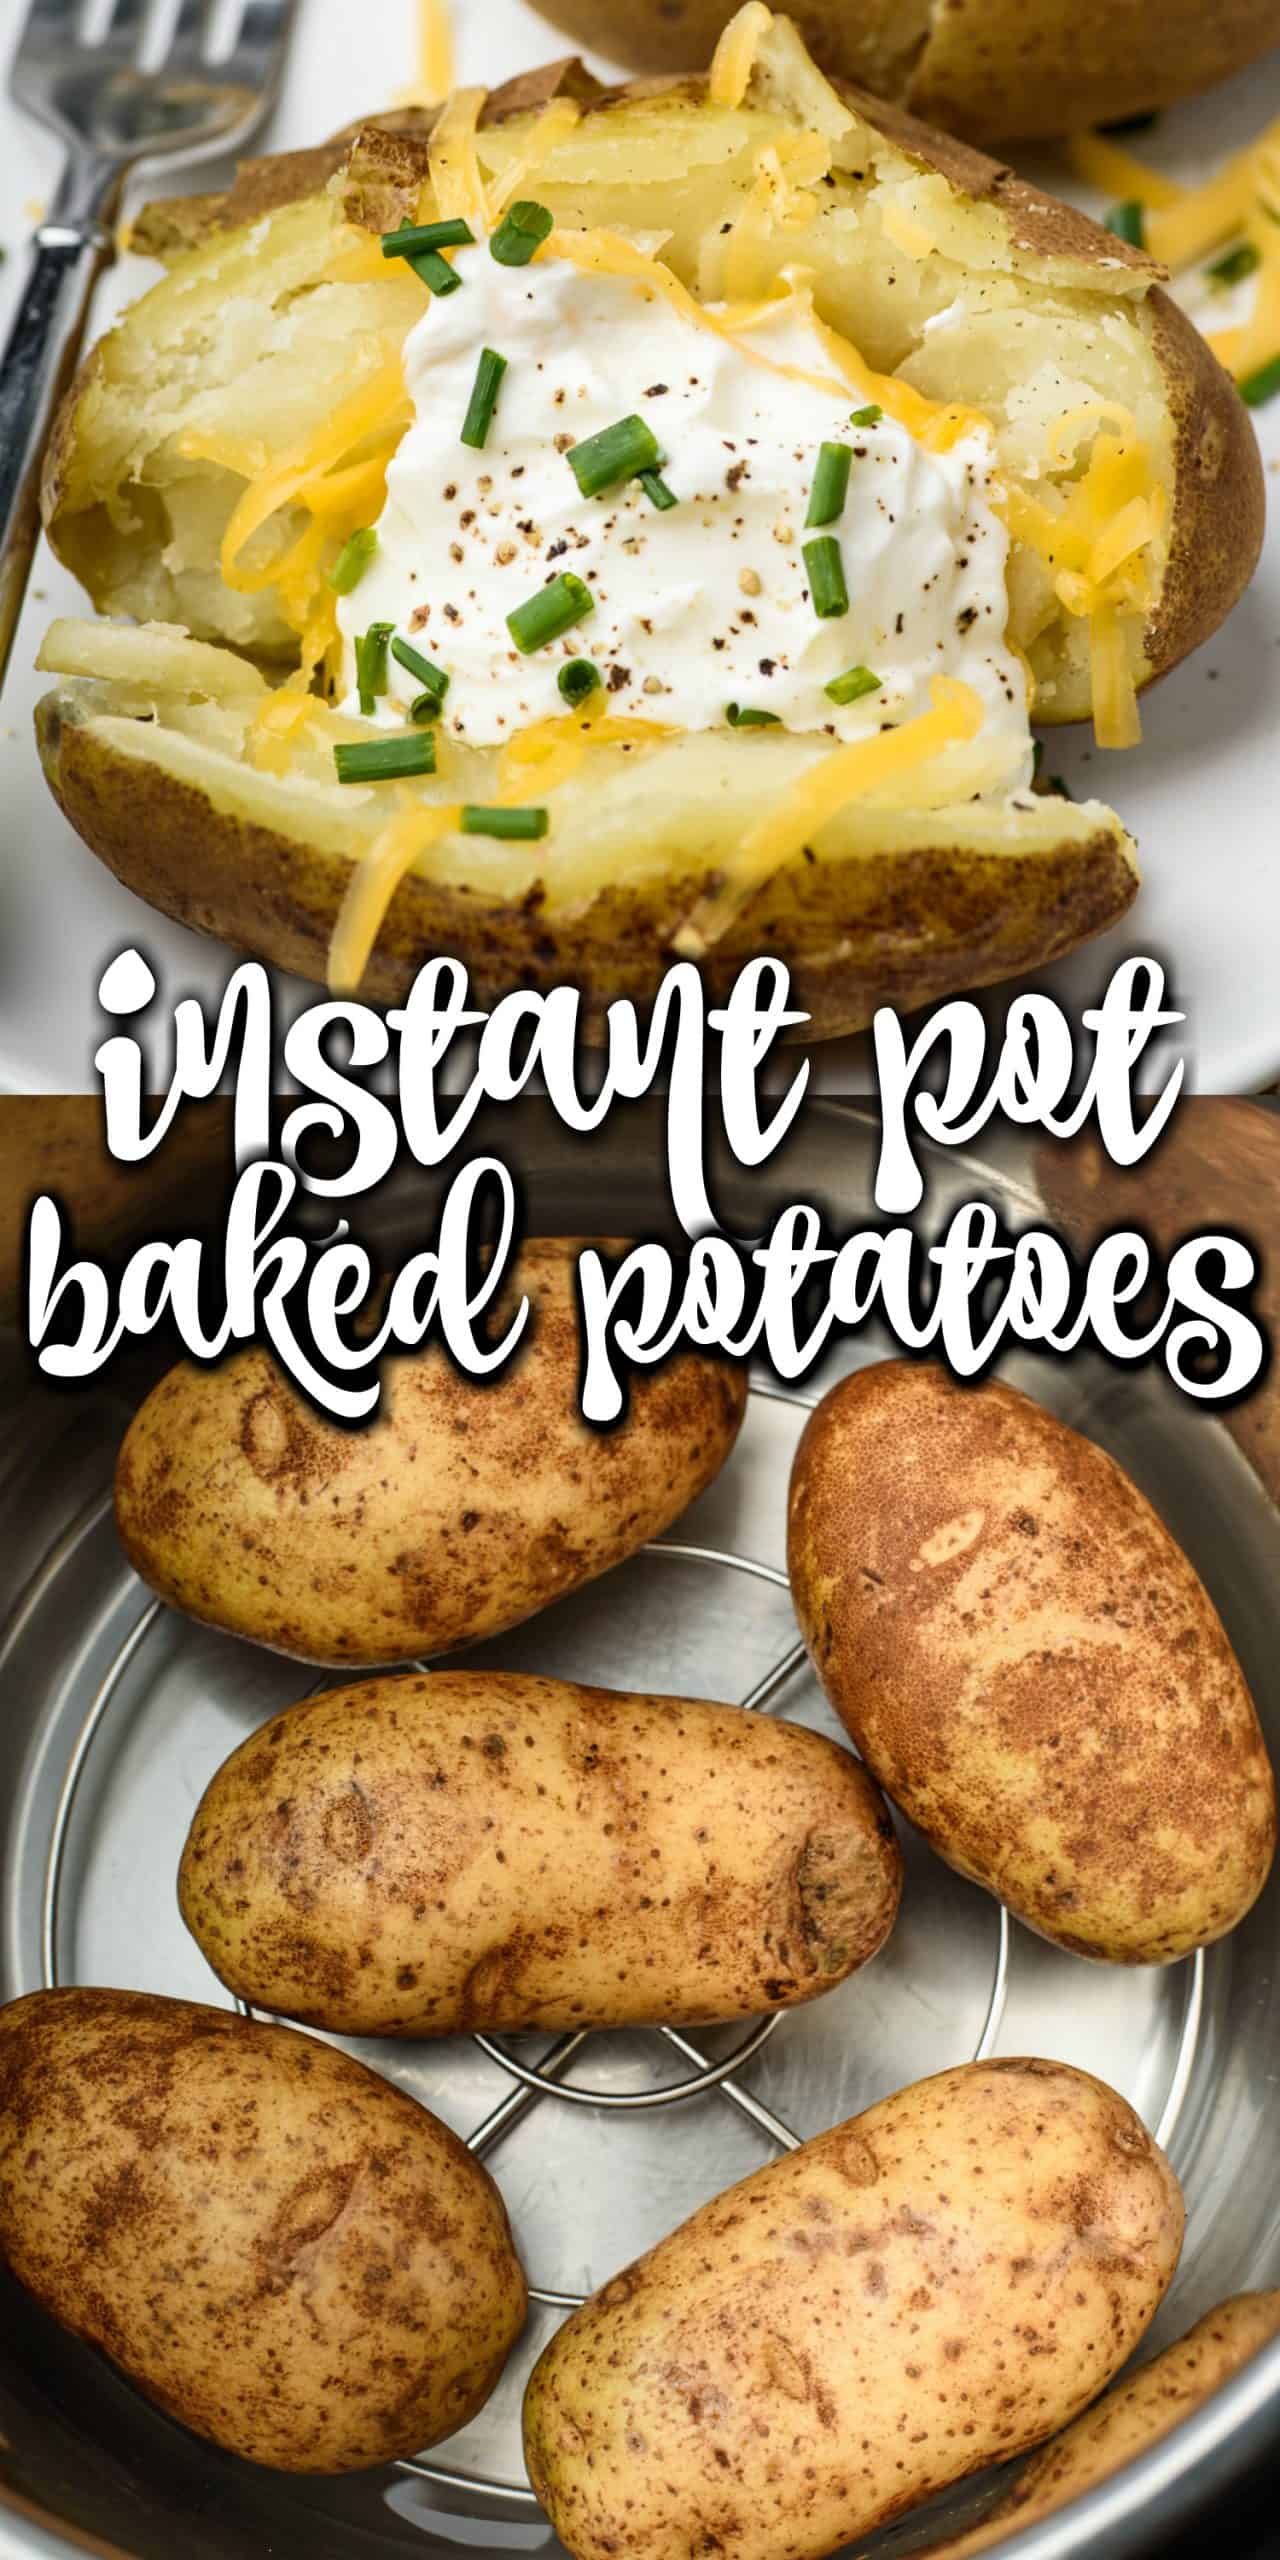 https://www.shugarysweets.com/wp-content/uploads/2020/01/instant-pot-baked-potatoes-22-scaled.jpg